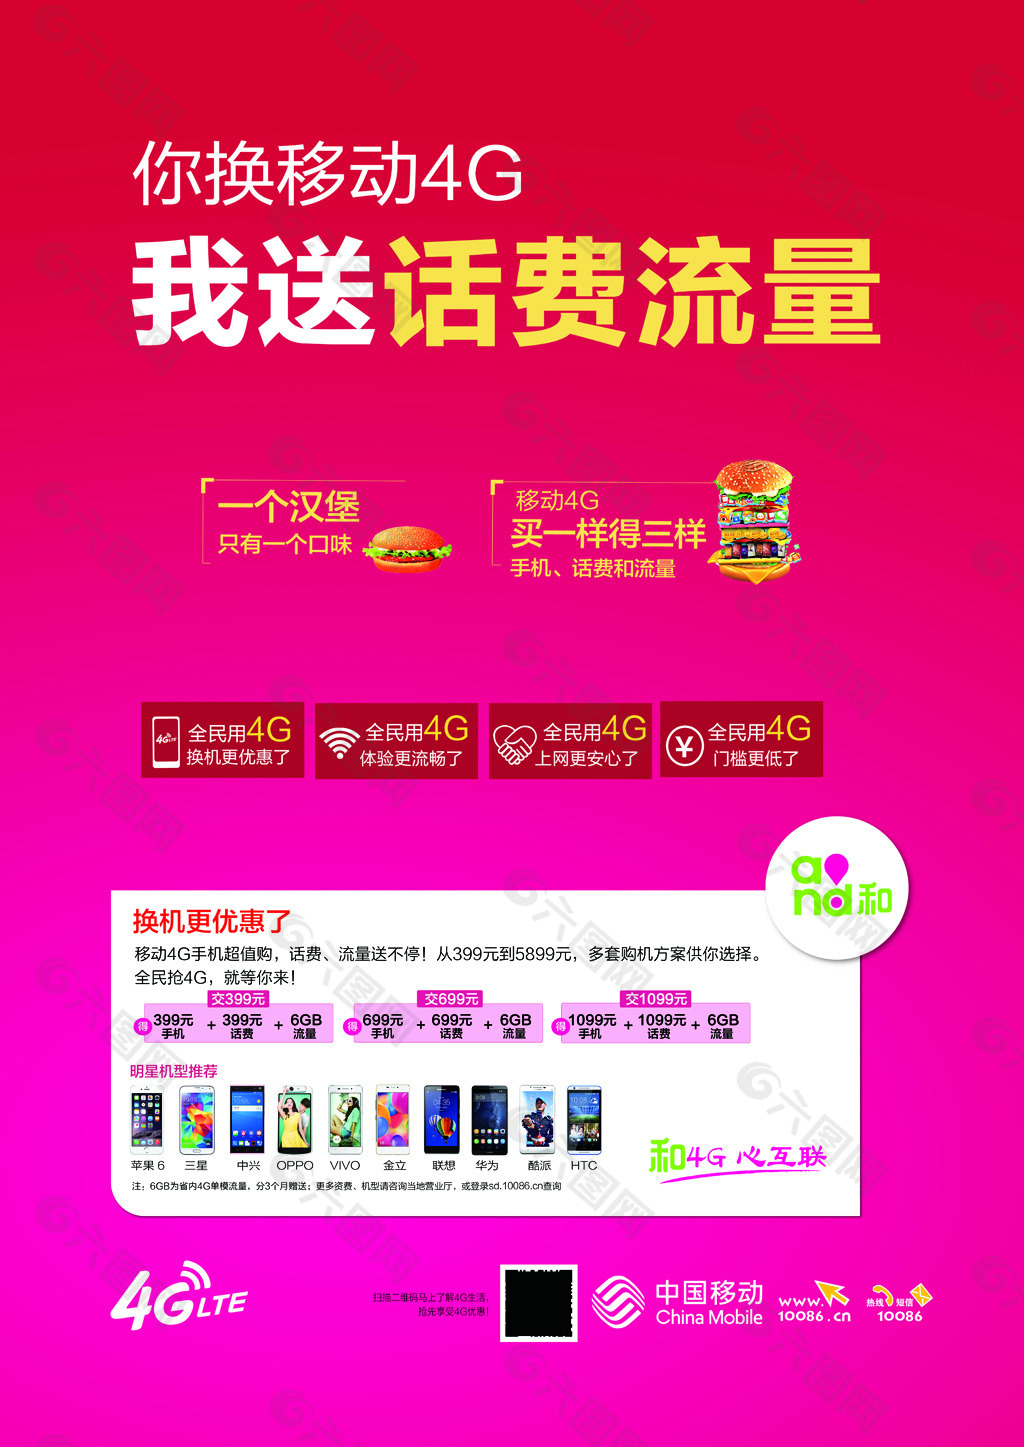 4G 中国移动 中国移动设计图__LOGO设计_广告设计_设计图库_昵图网nipic.com